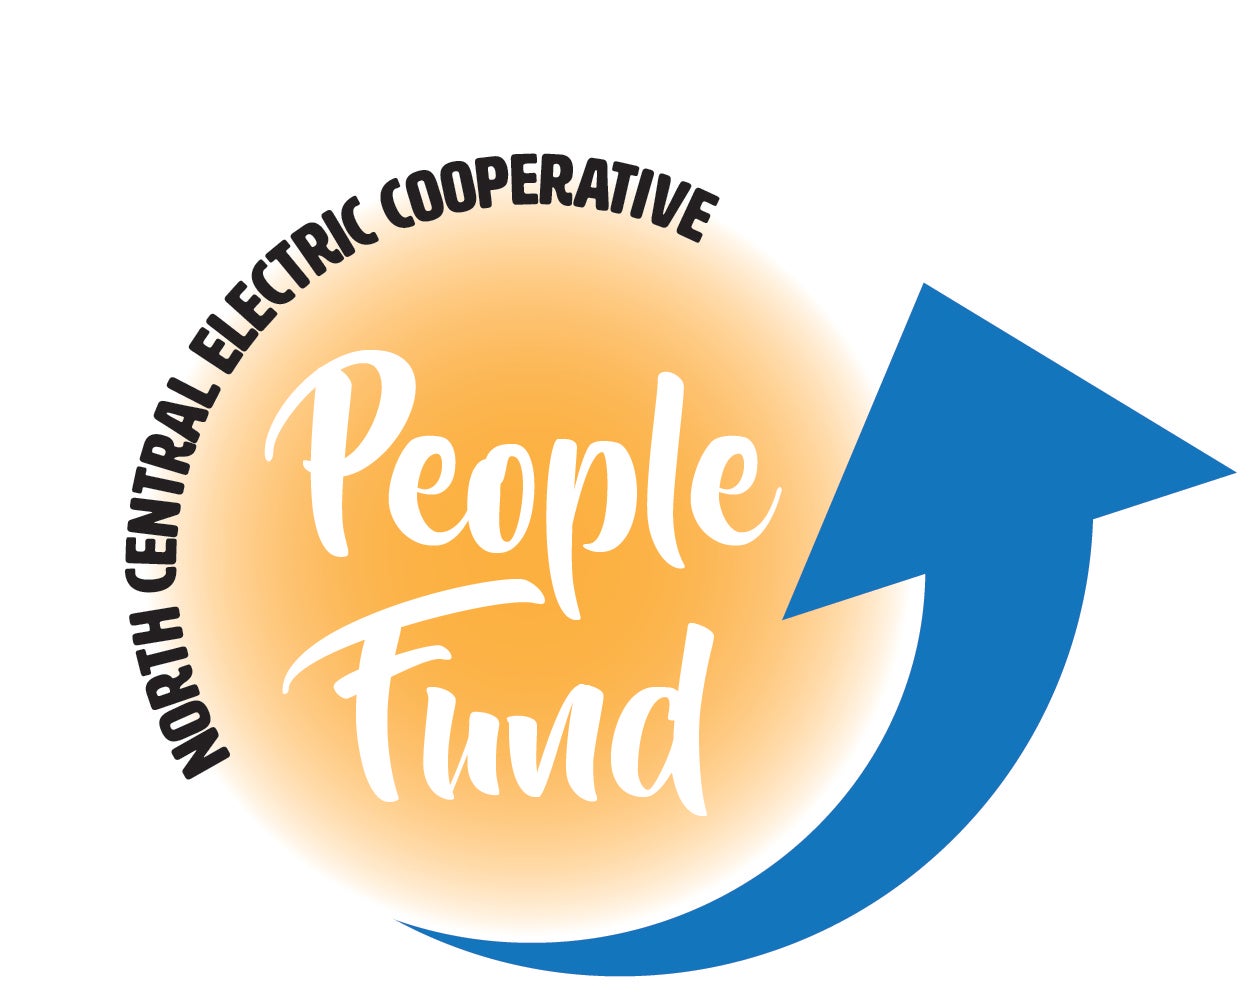 People Fund